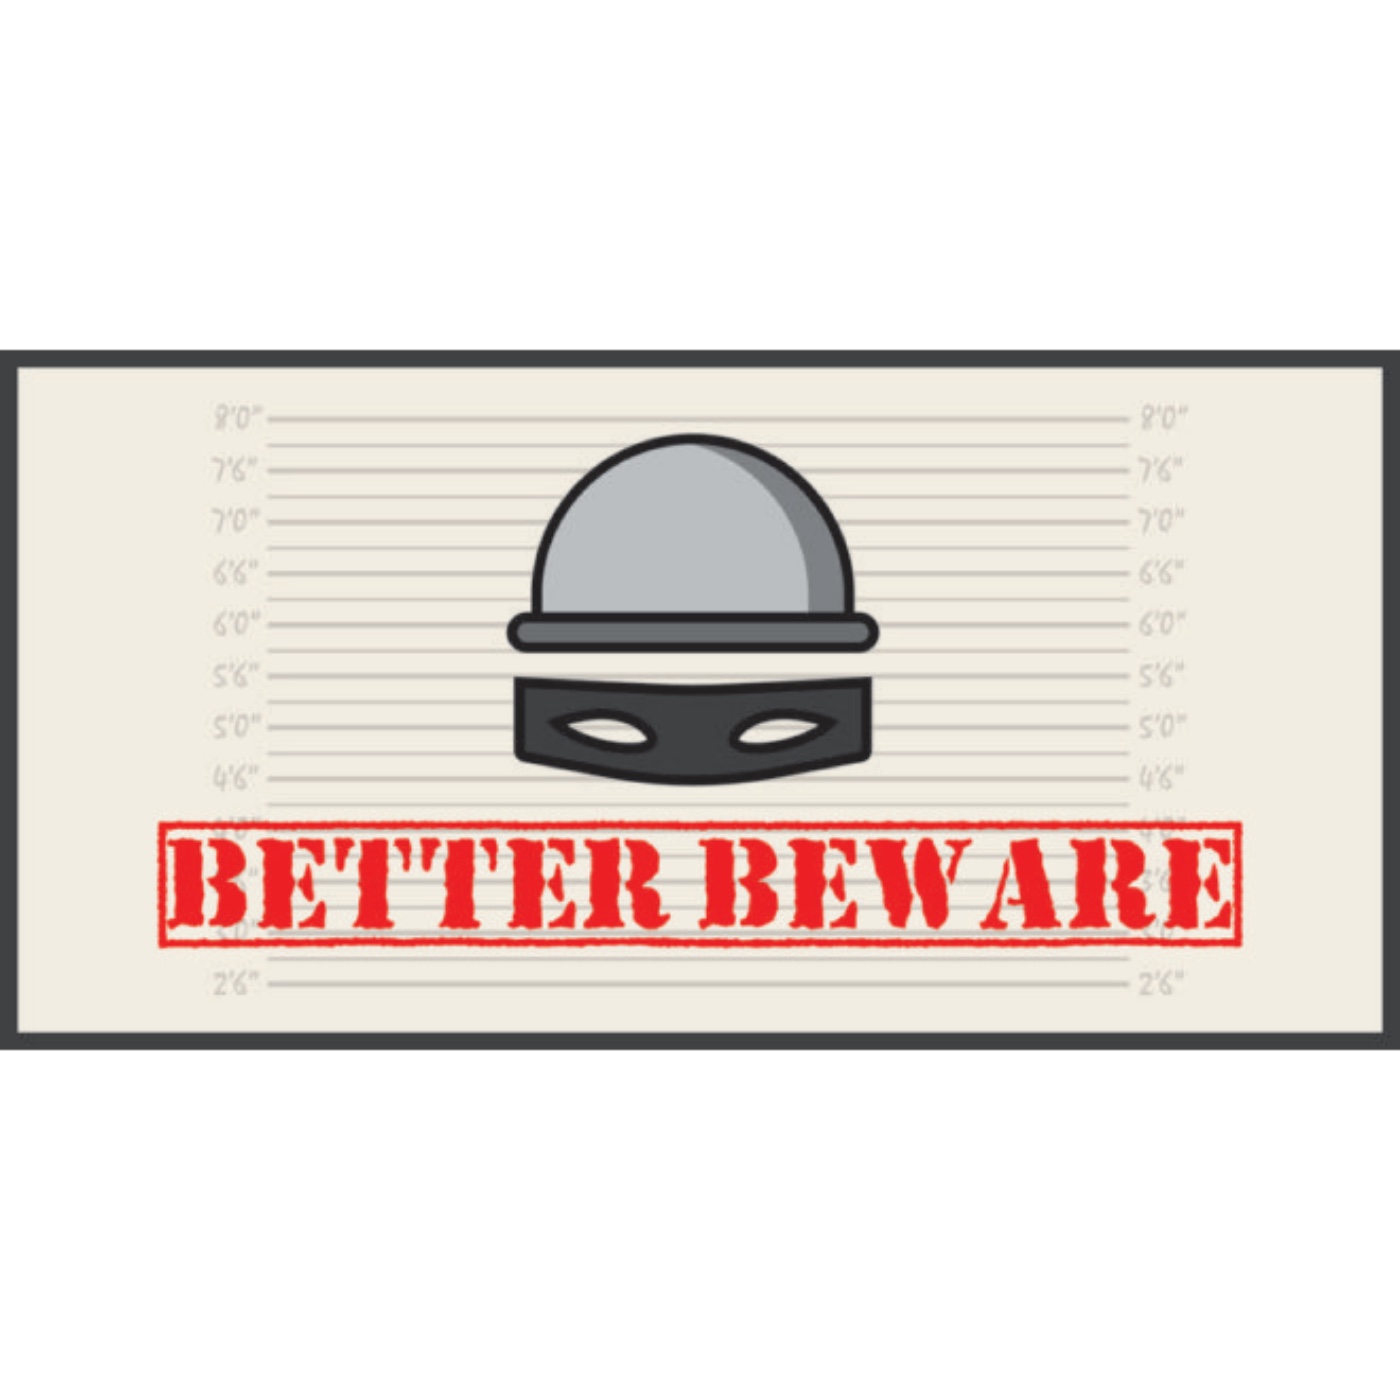 Better Beware! – WFHB